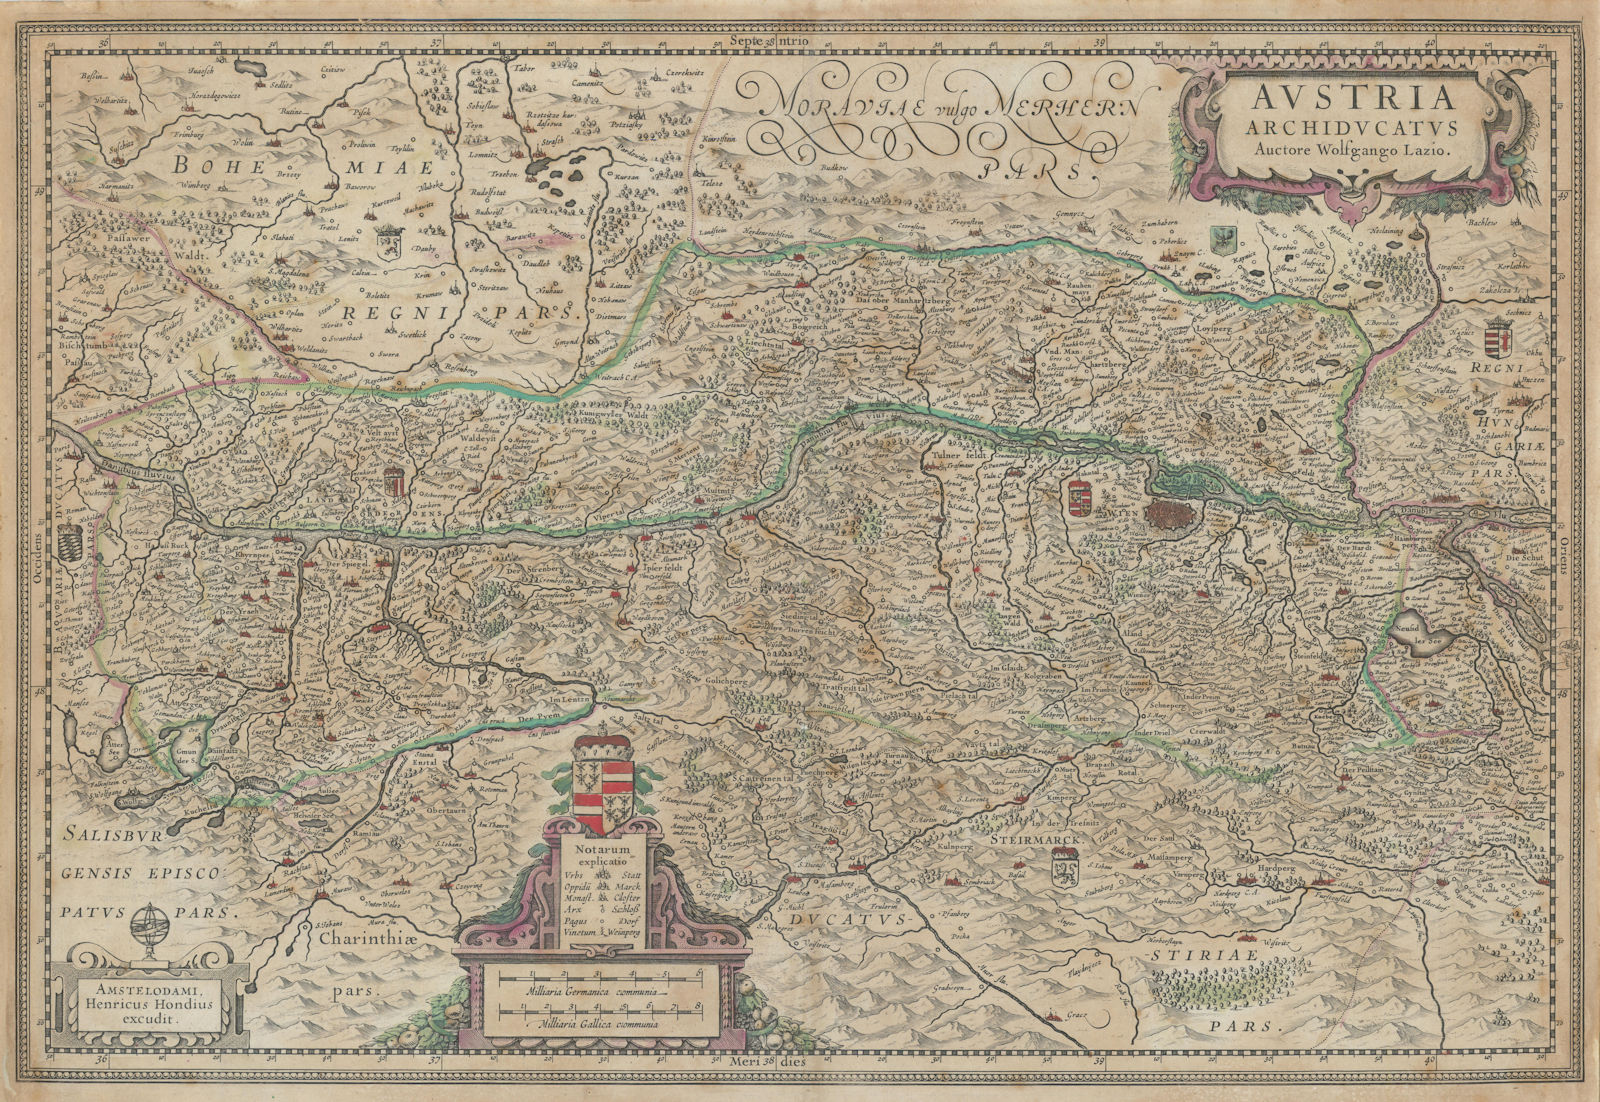 Associate Product Austria Archiducatus auctore Wolfgango Lazio by Henricus Hondius c1636 old map